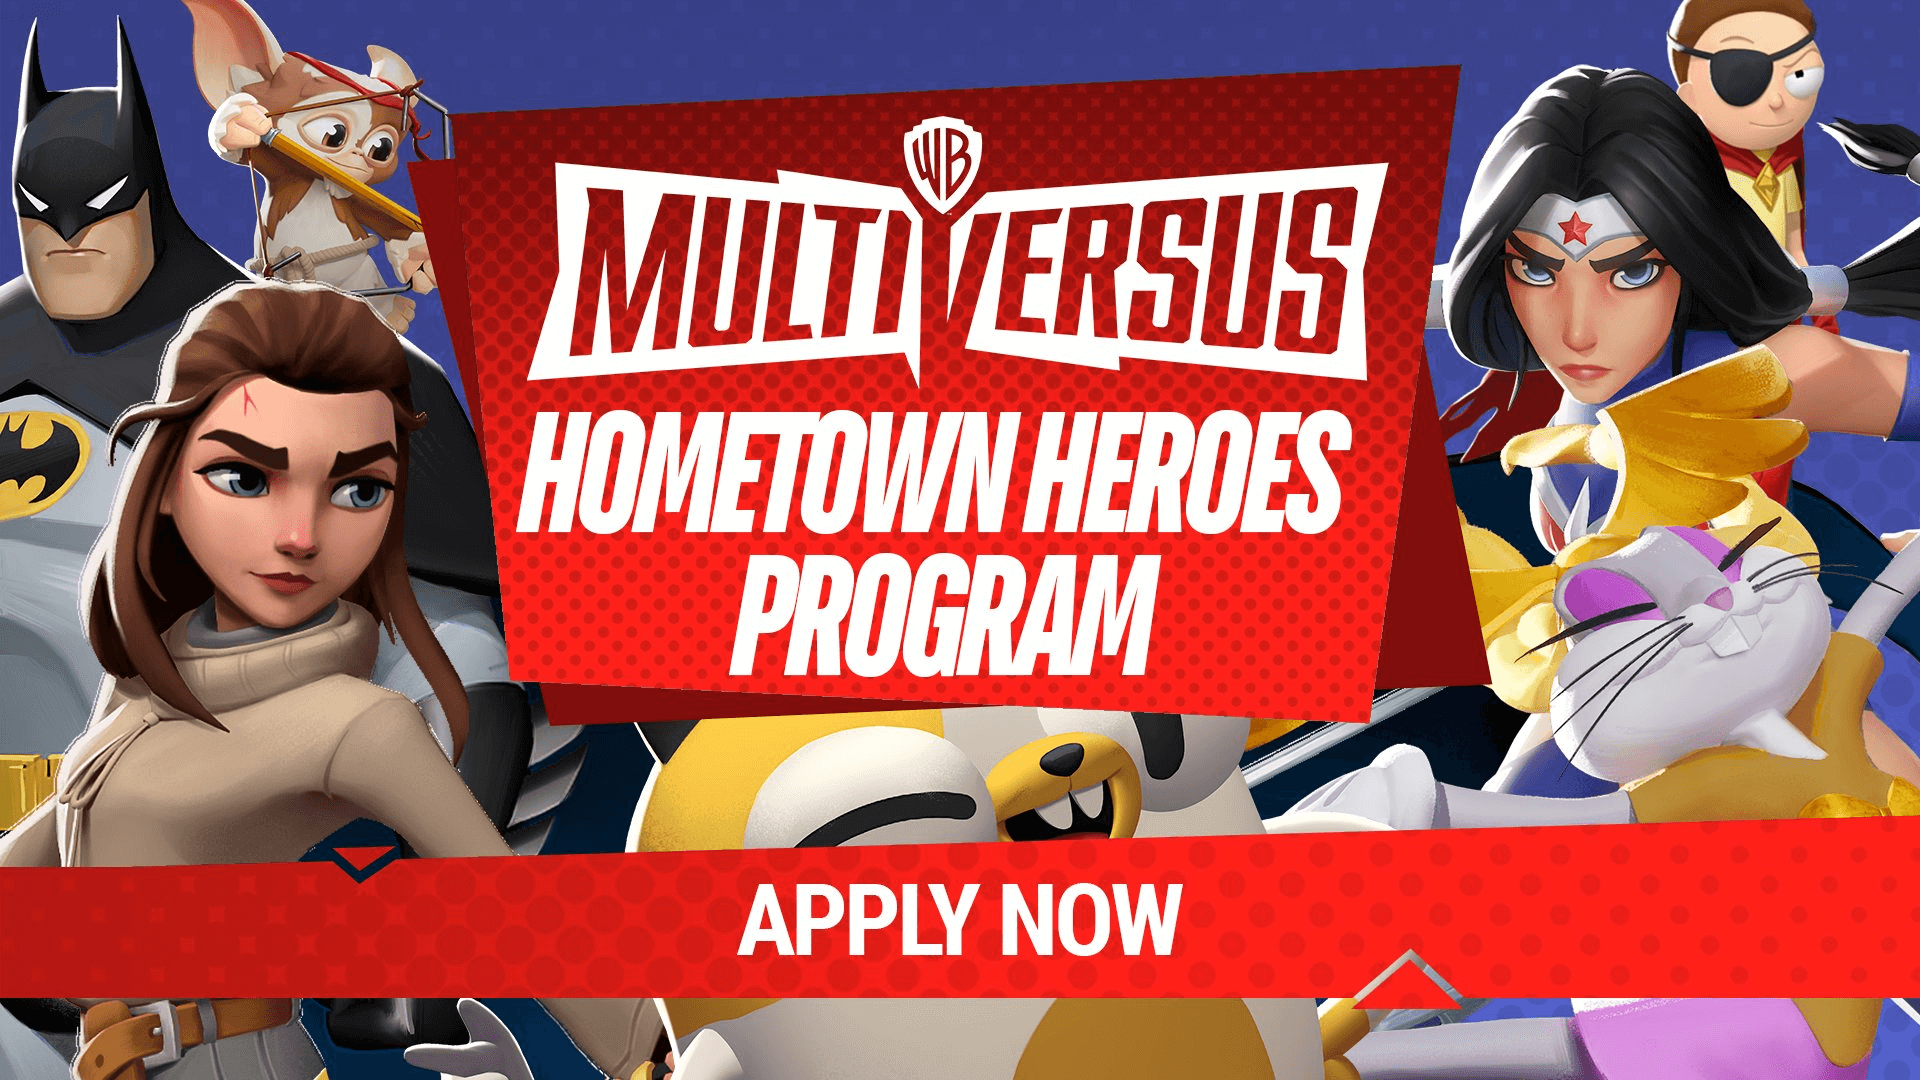 Multiversus Announces "Hometown Heroes" Program Rewarding Organizers